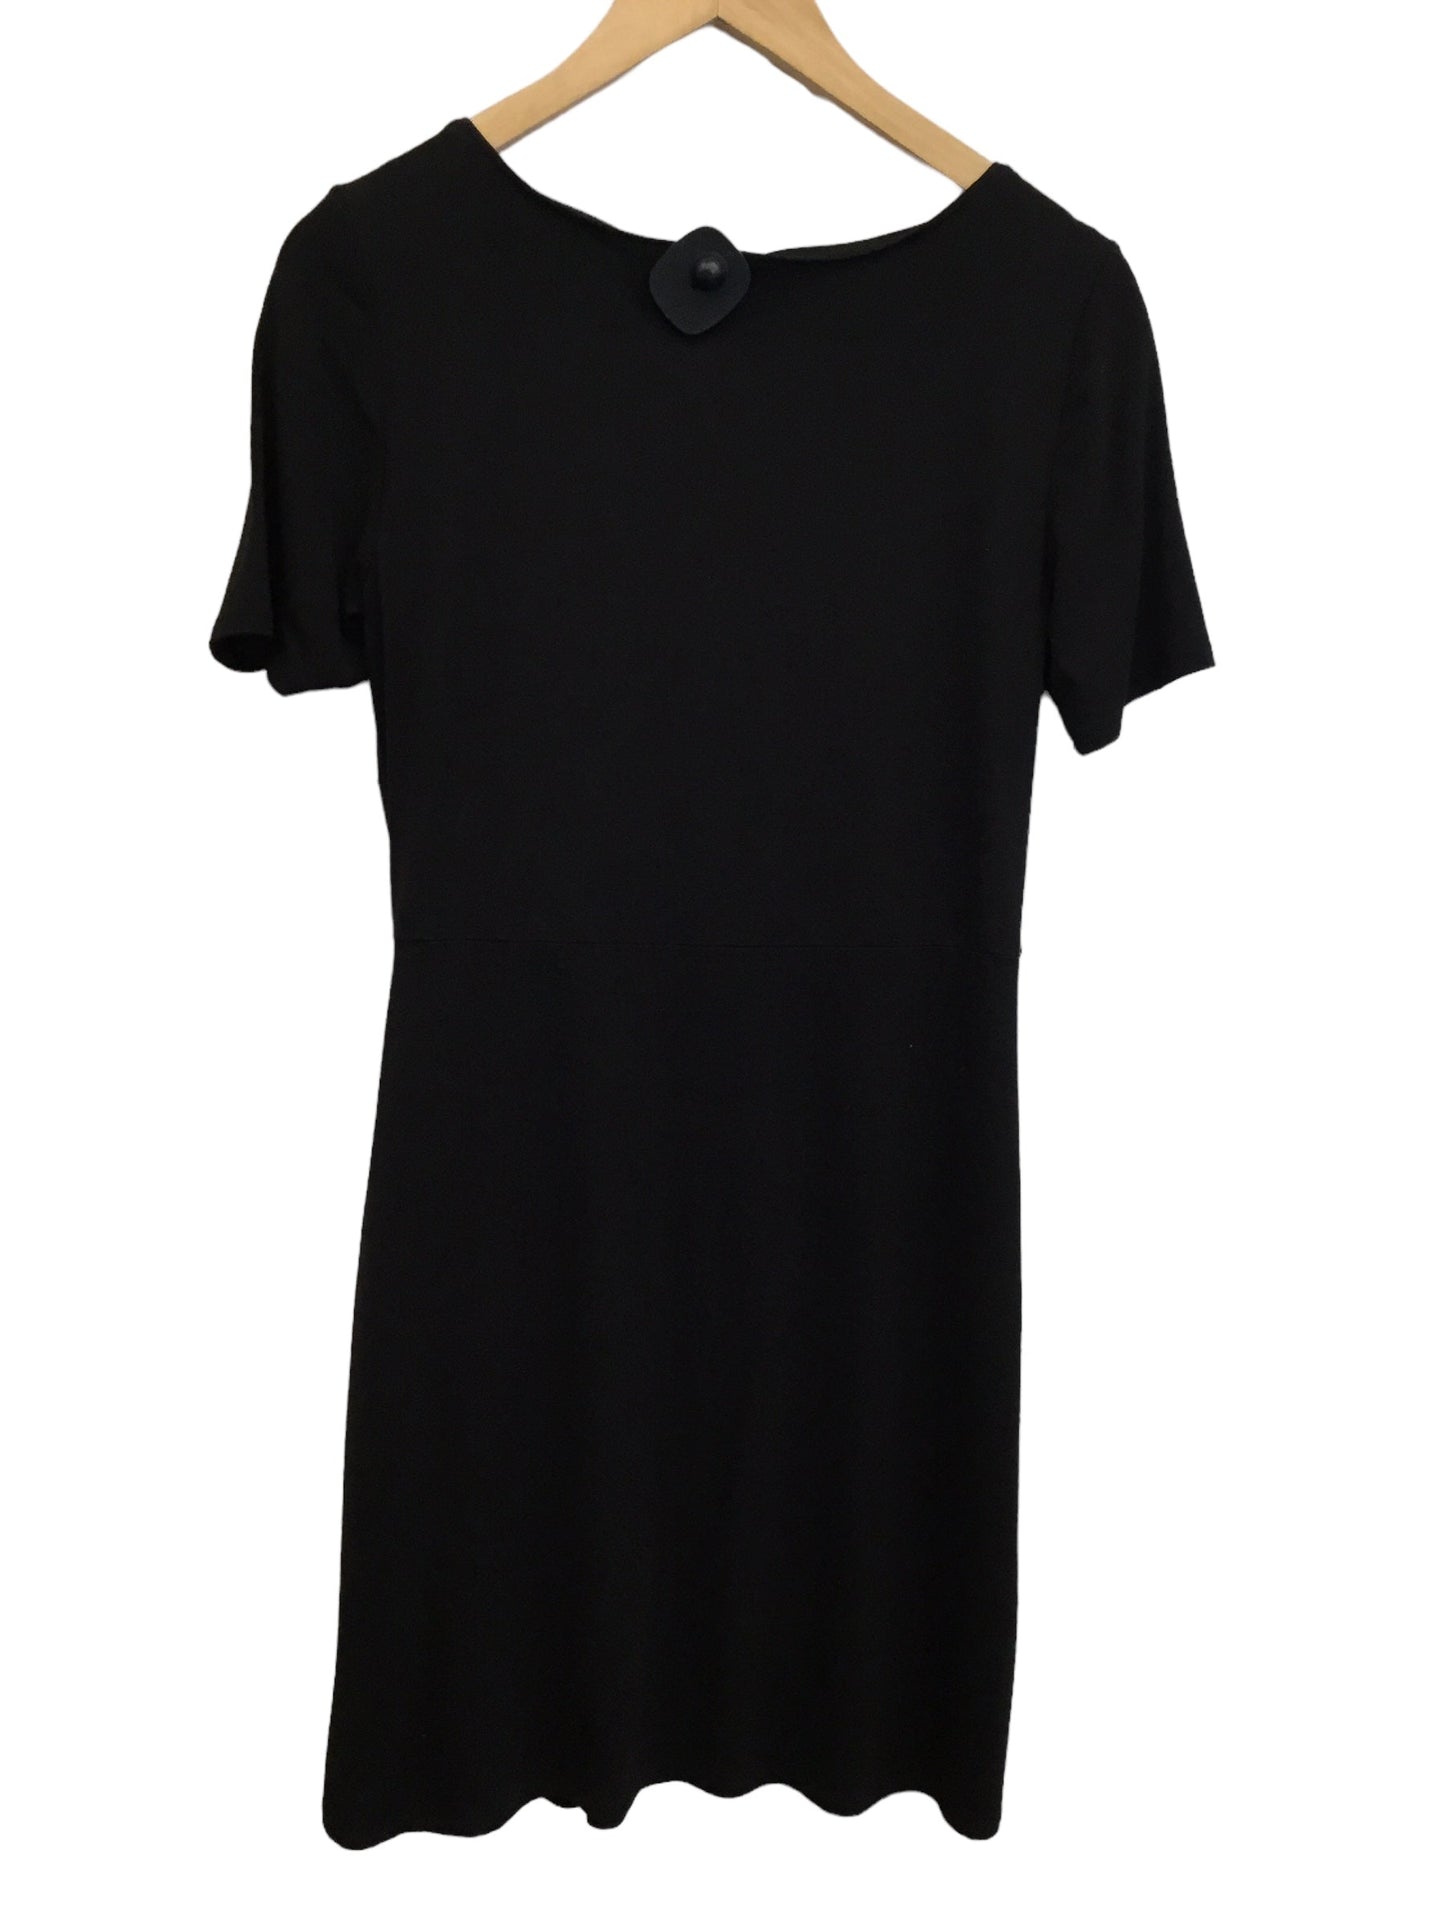 Dress Casual Midi By White House Black Market  Size: S